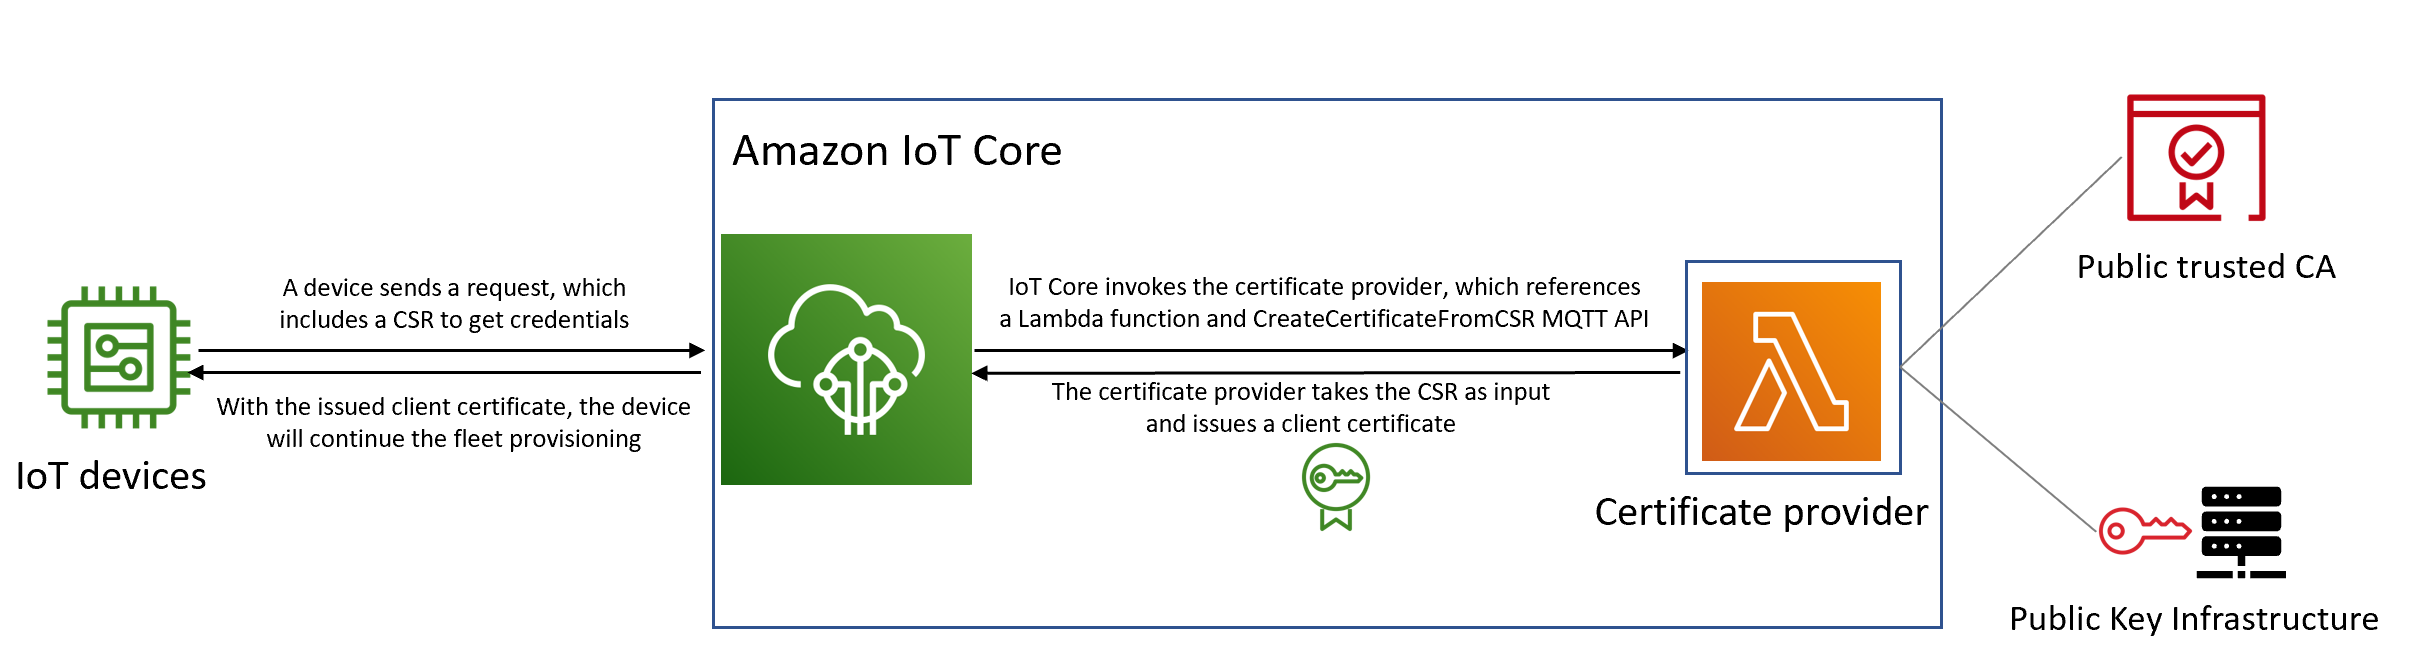 Amazon IoT Core certificate provider for fleet provisioning